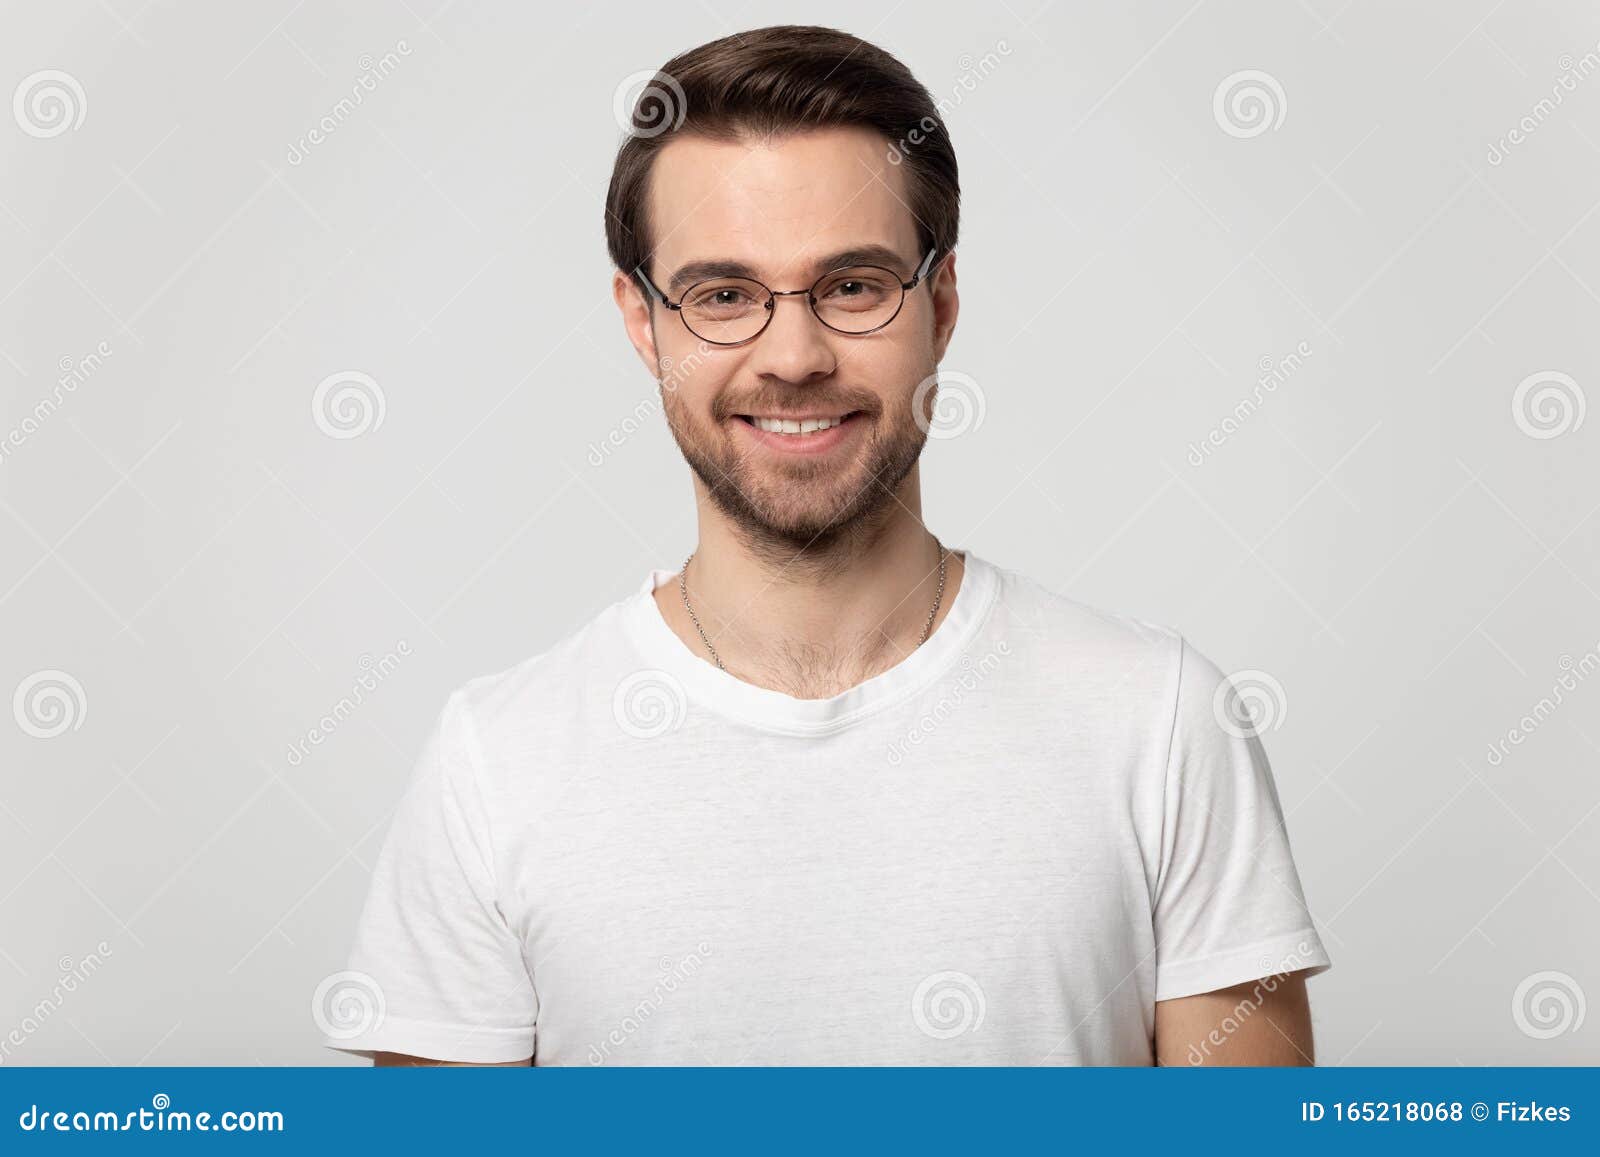 headshot portrait of smiling man in glasses on studio background